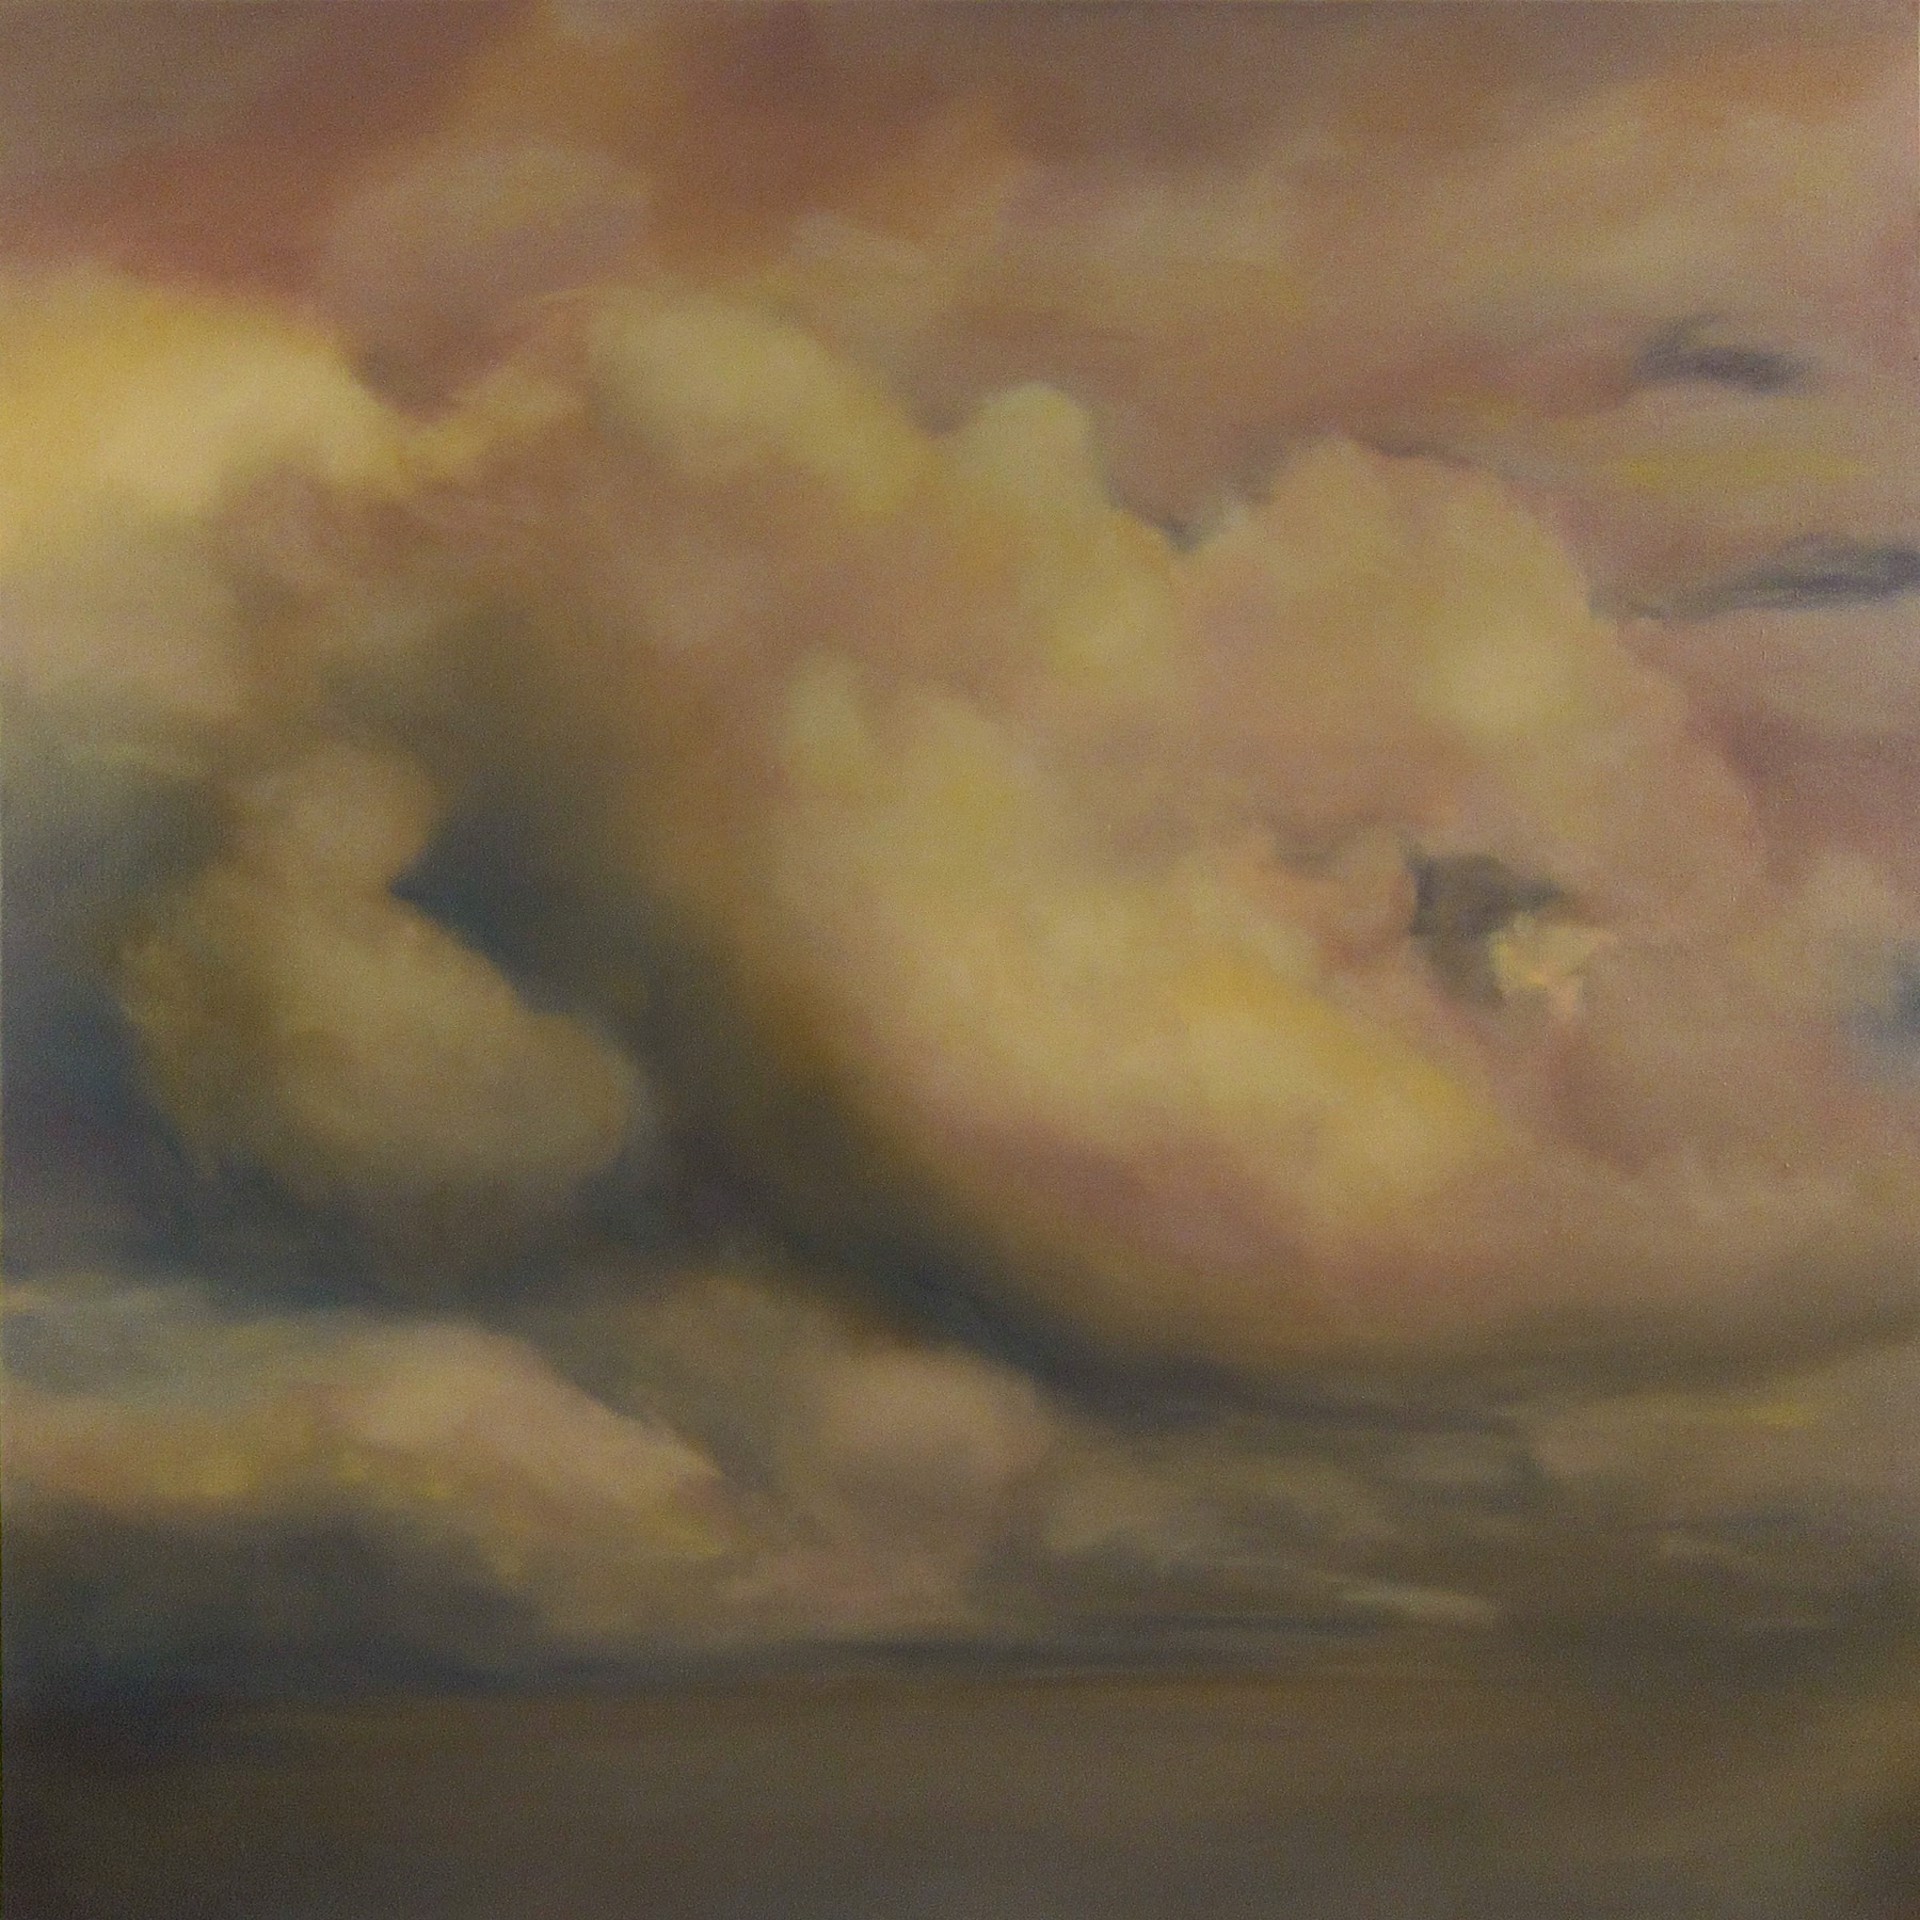 Cieux de Braises (Ember Skies) by Frederic Choisel